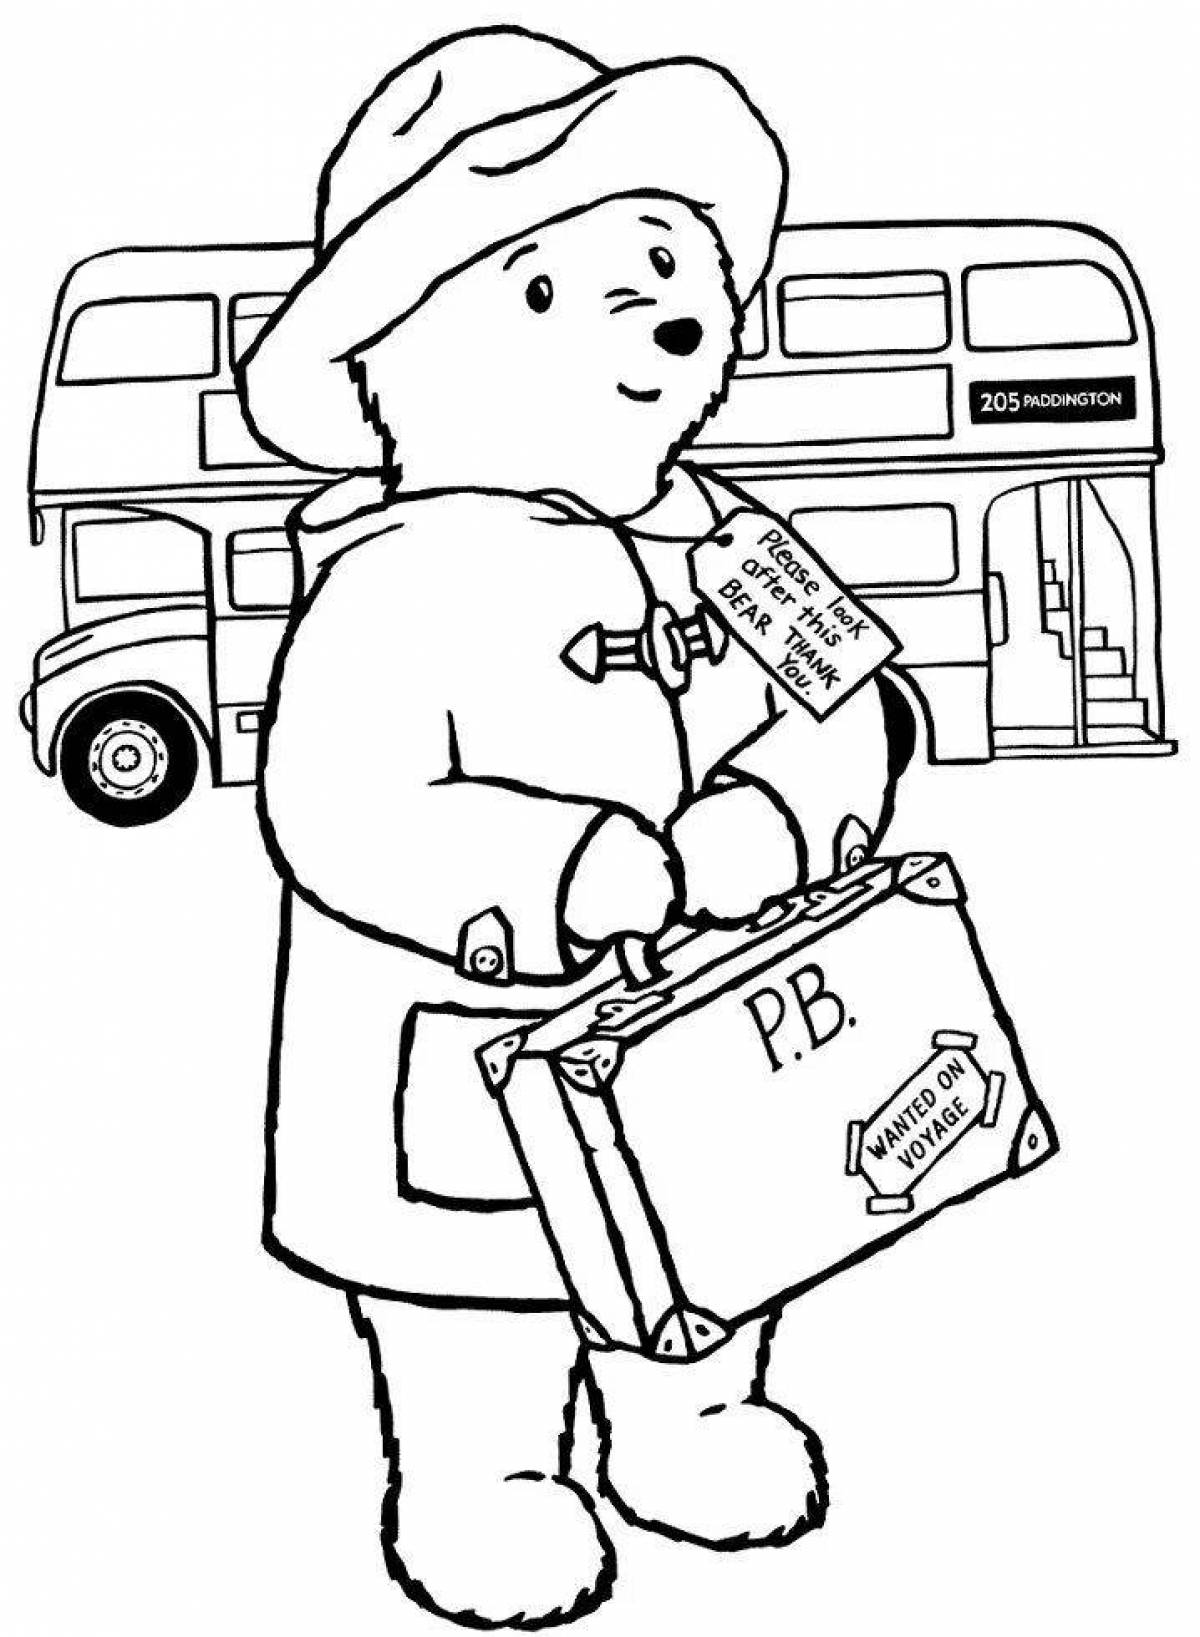 Paddington bear #1